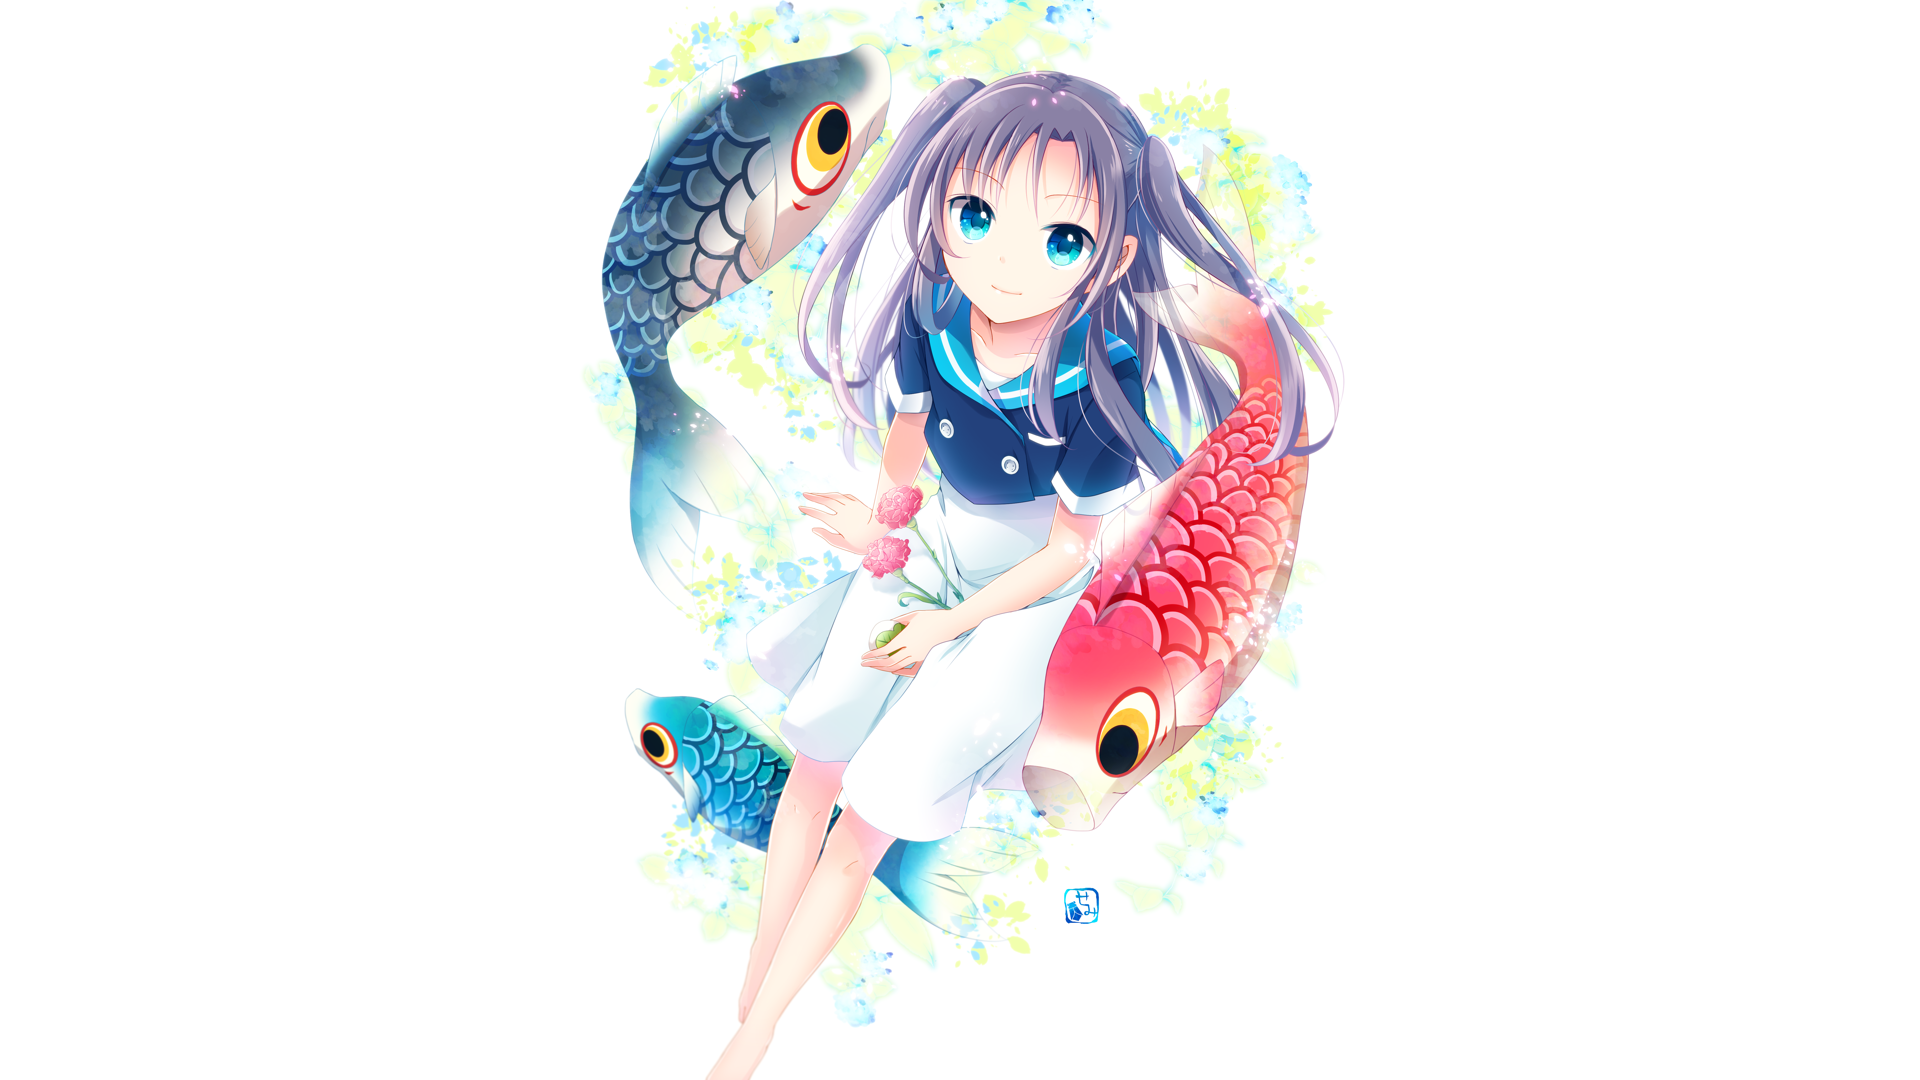 Wallpaper Fishes, cute, anime girl, original, minimal